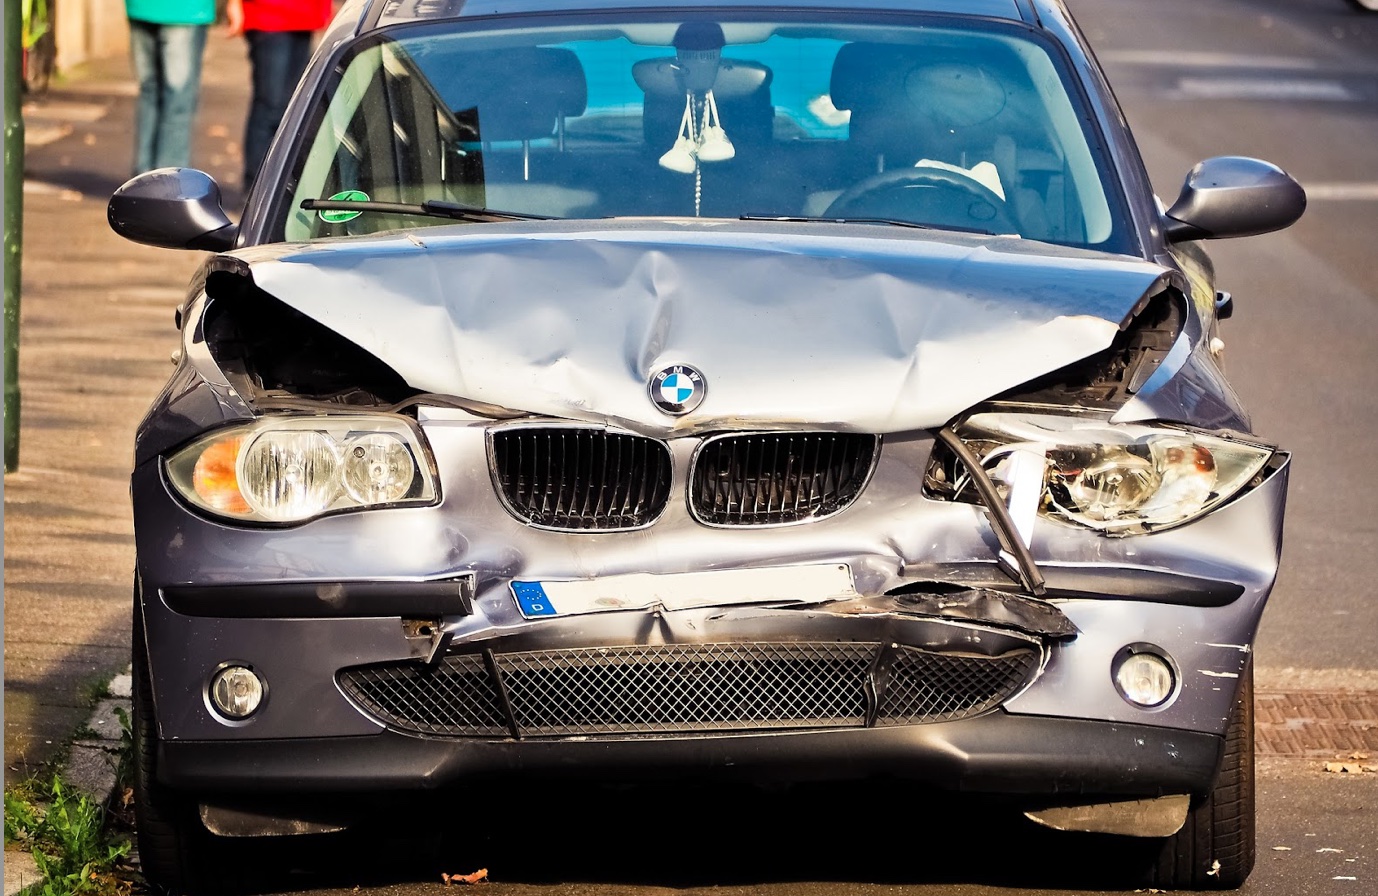 Car with front-end damage; image by 652234, via Pixabay.com.